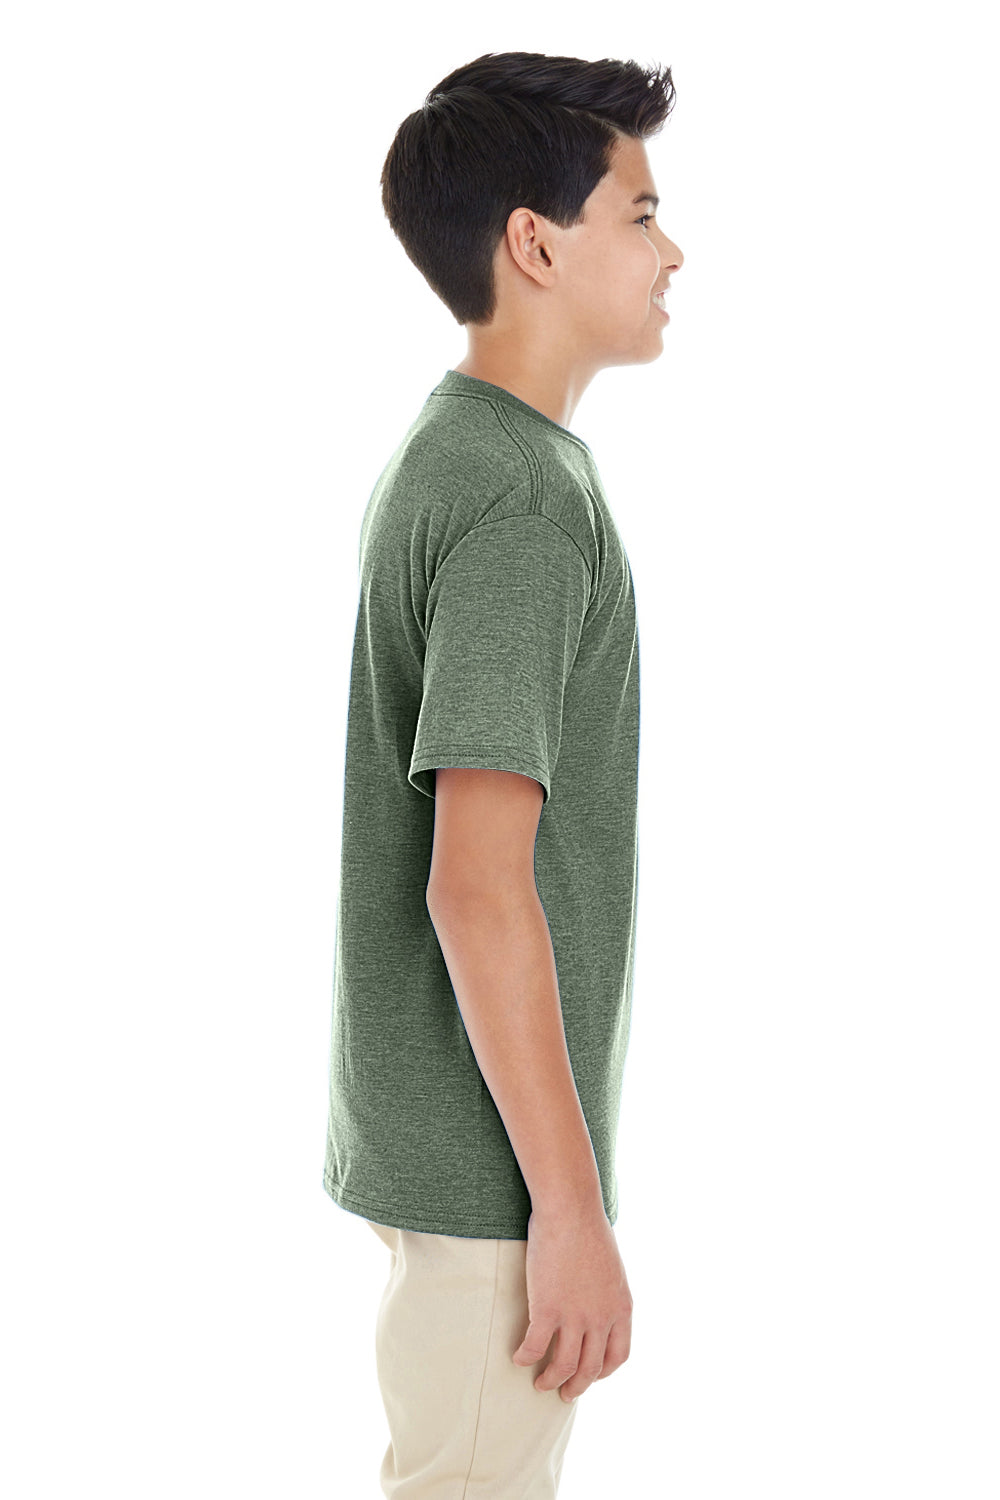 Gildan G645B Youth Softstyle Short Sleeve Crewneck T-Shirt Heather Military Green Side